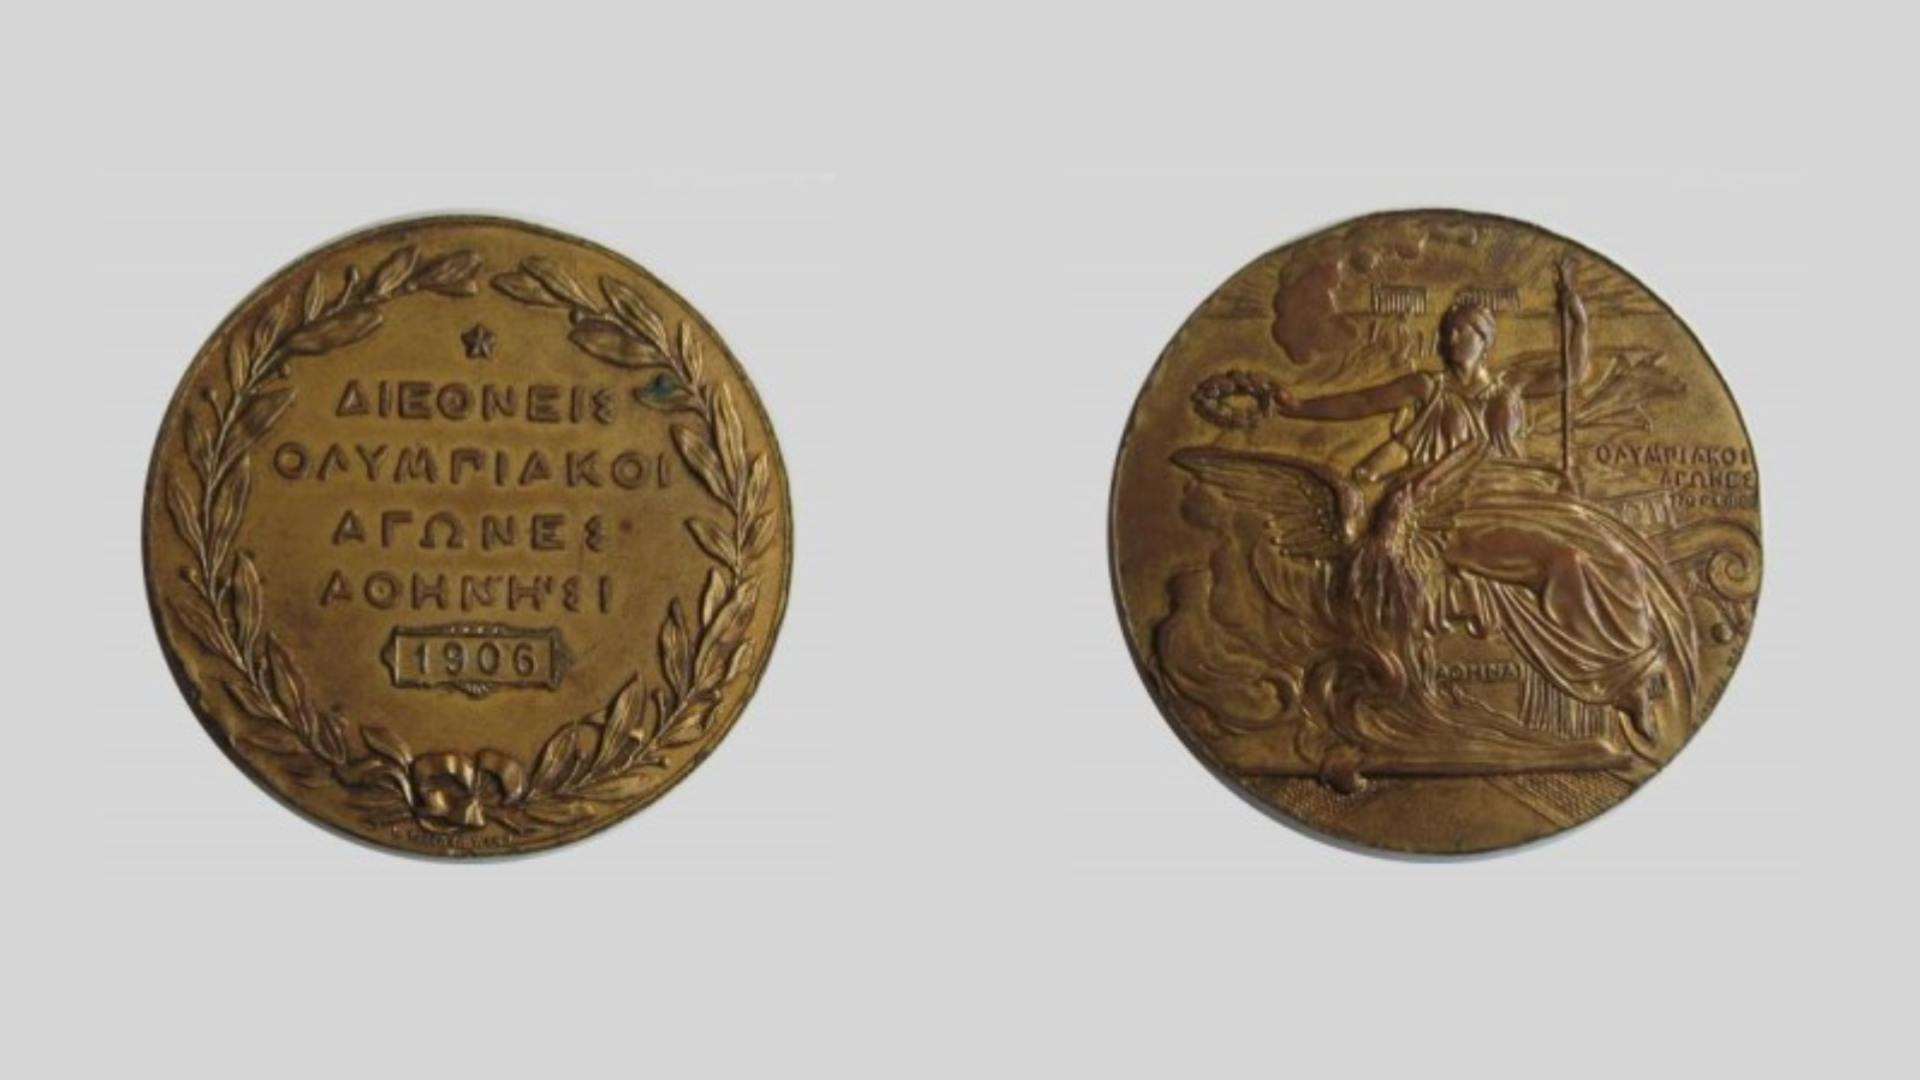 Participation medals |1906 Athens Games